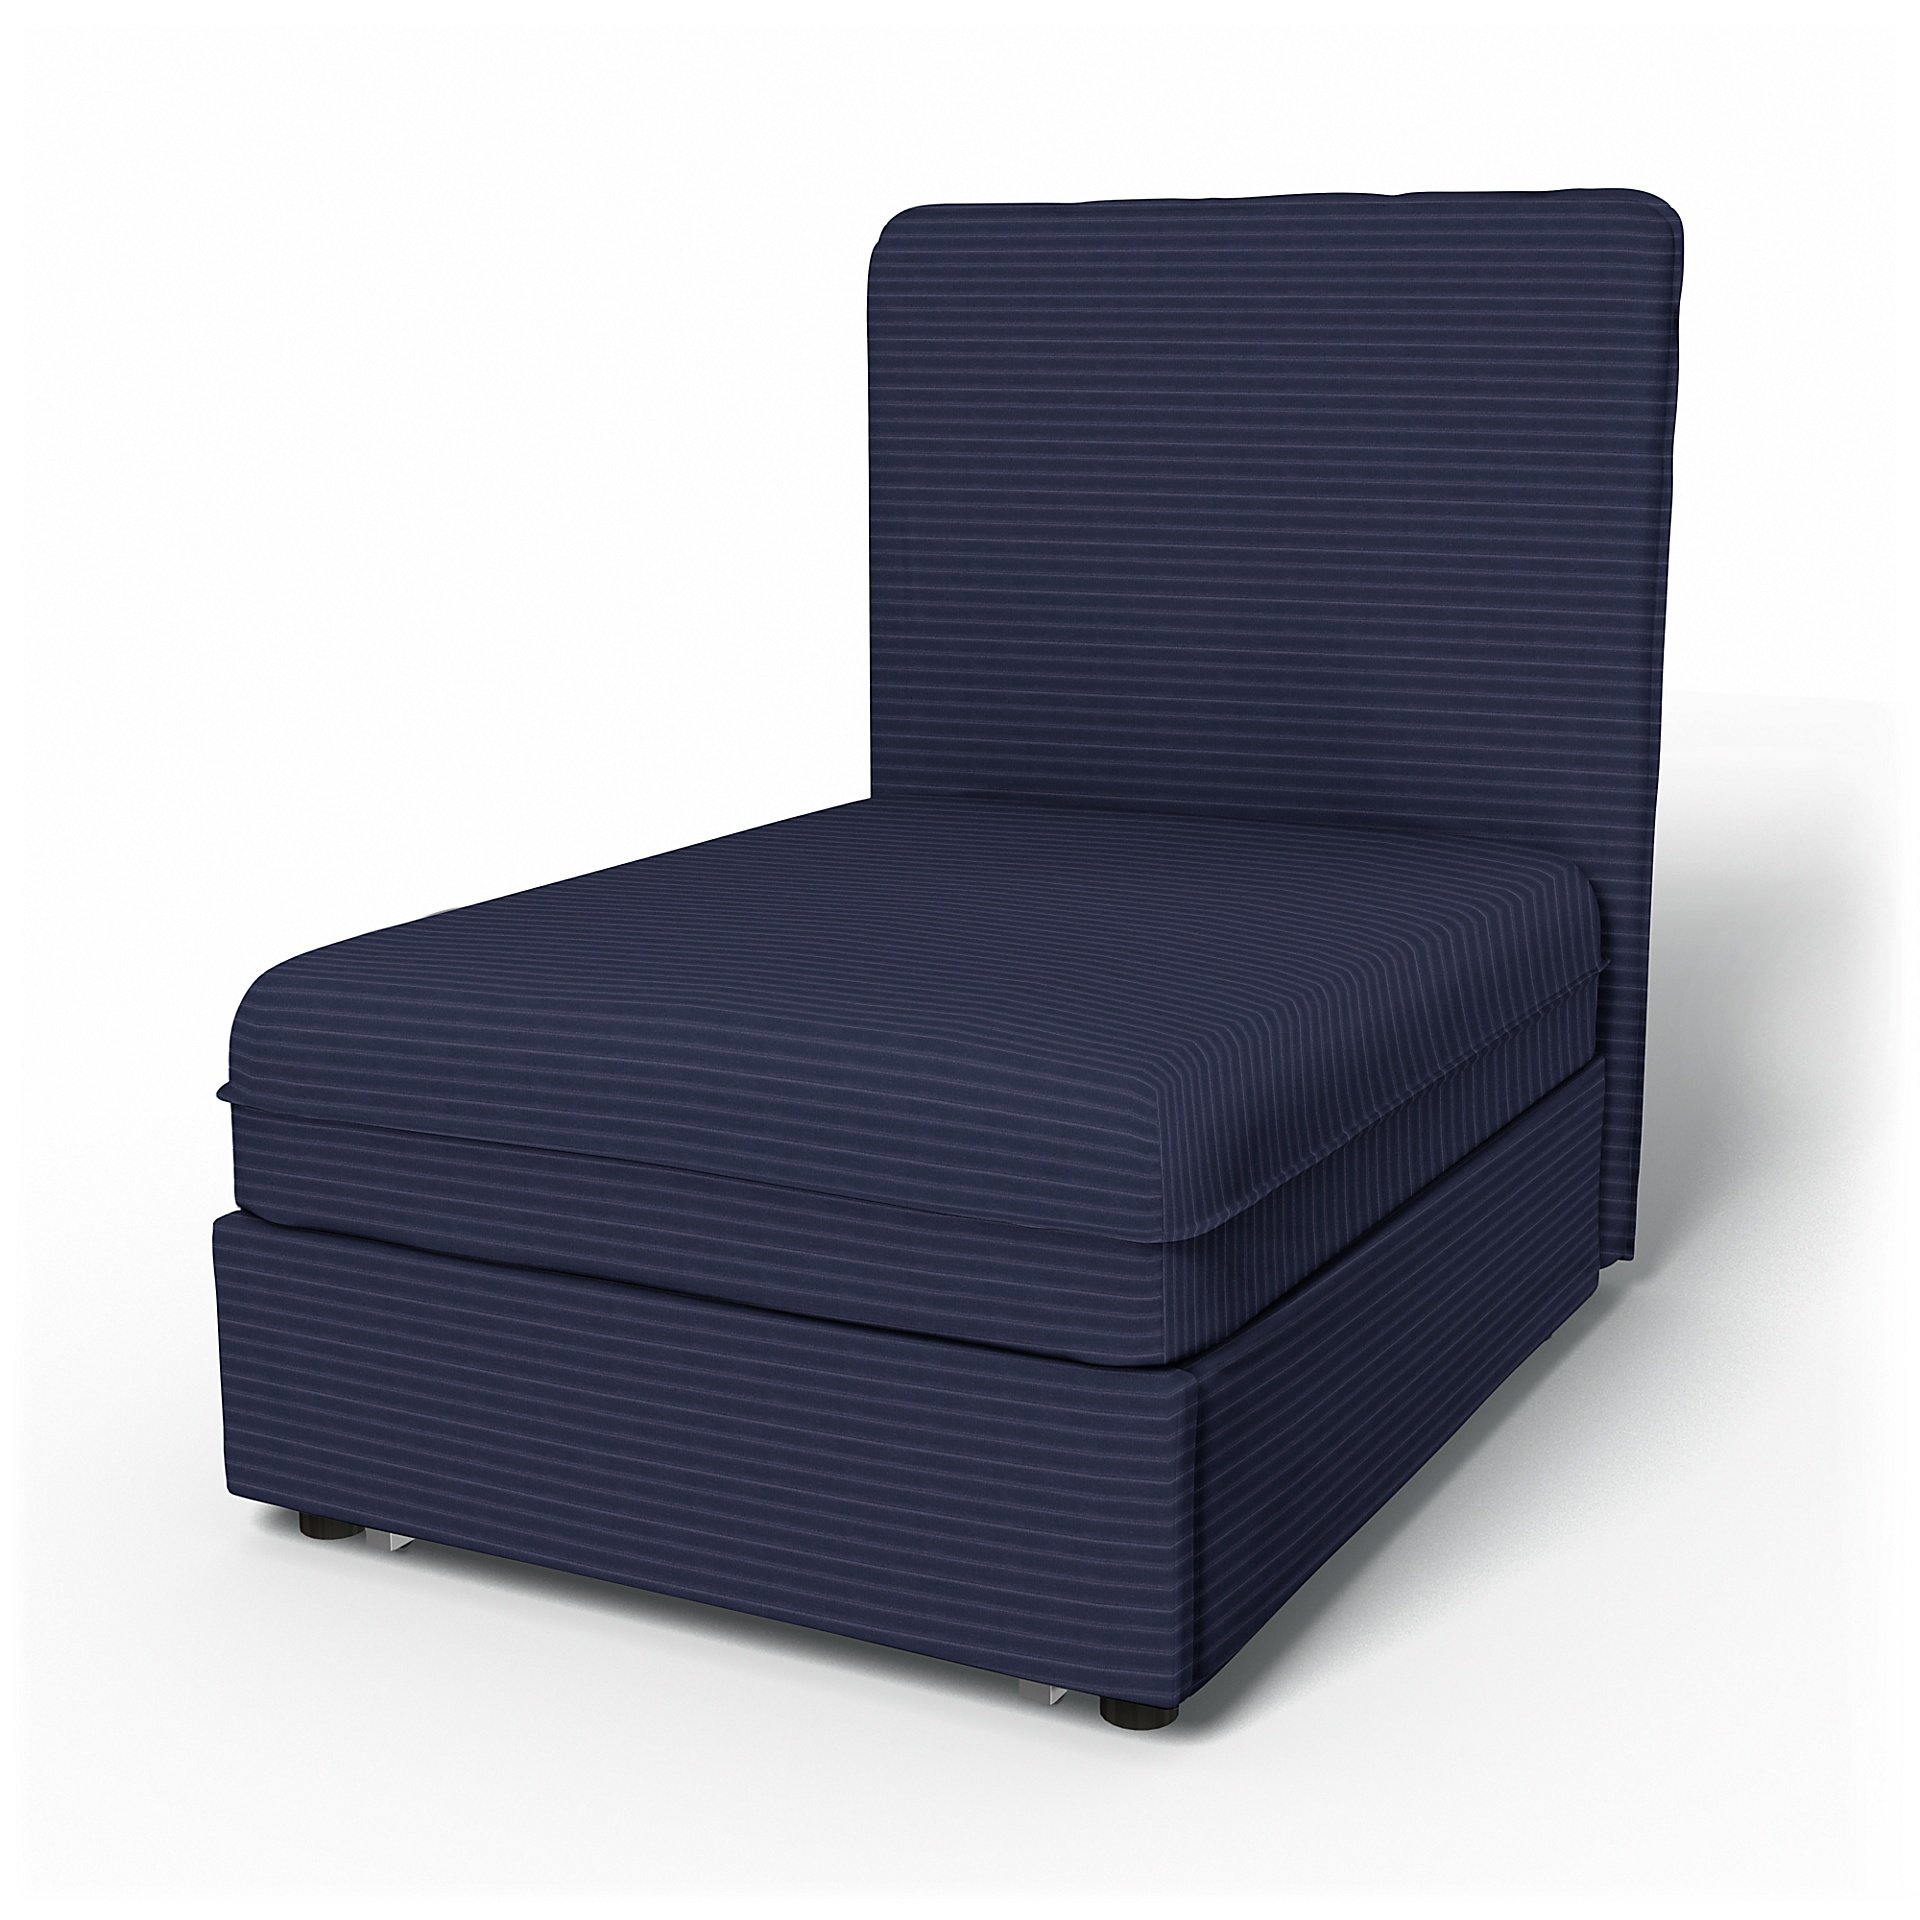 IKEA - Vallentuna Seat Module with High Back Sofa Bed Cover (80x100x46cm), Volcanic Ash, Corduroy - 